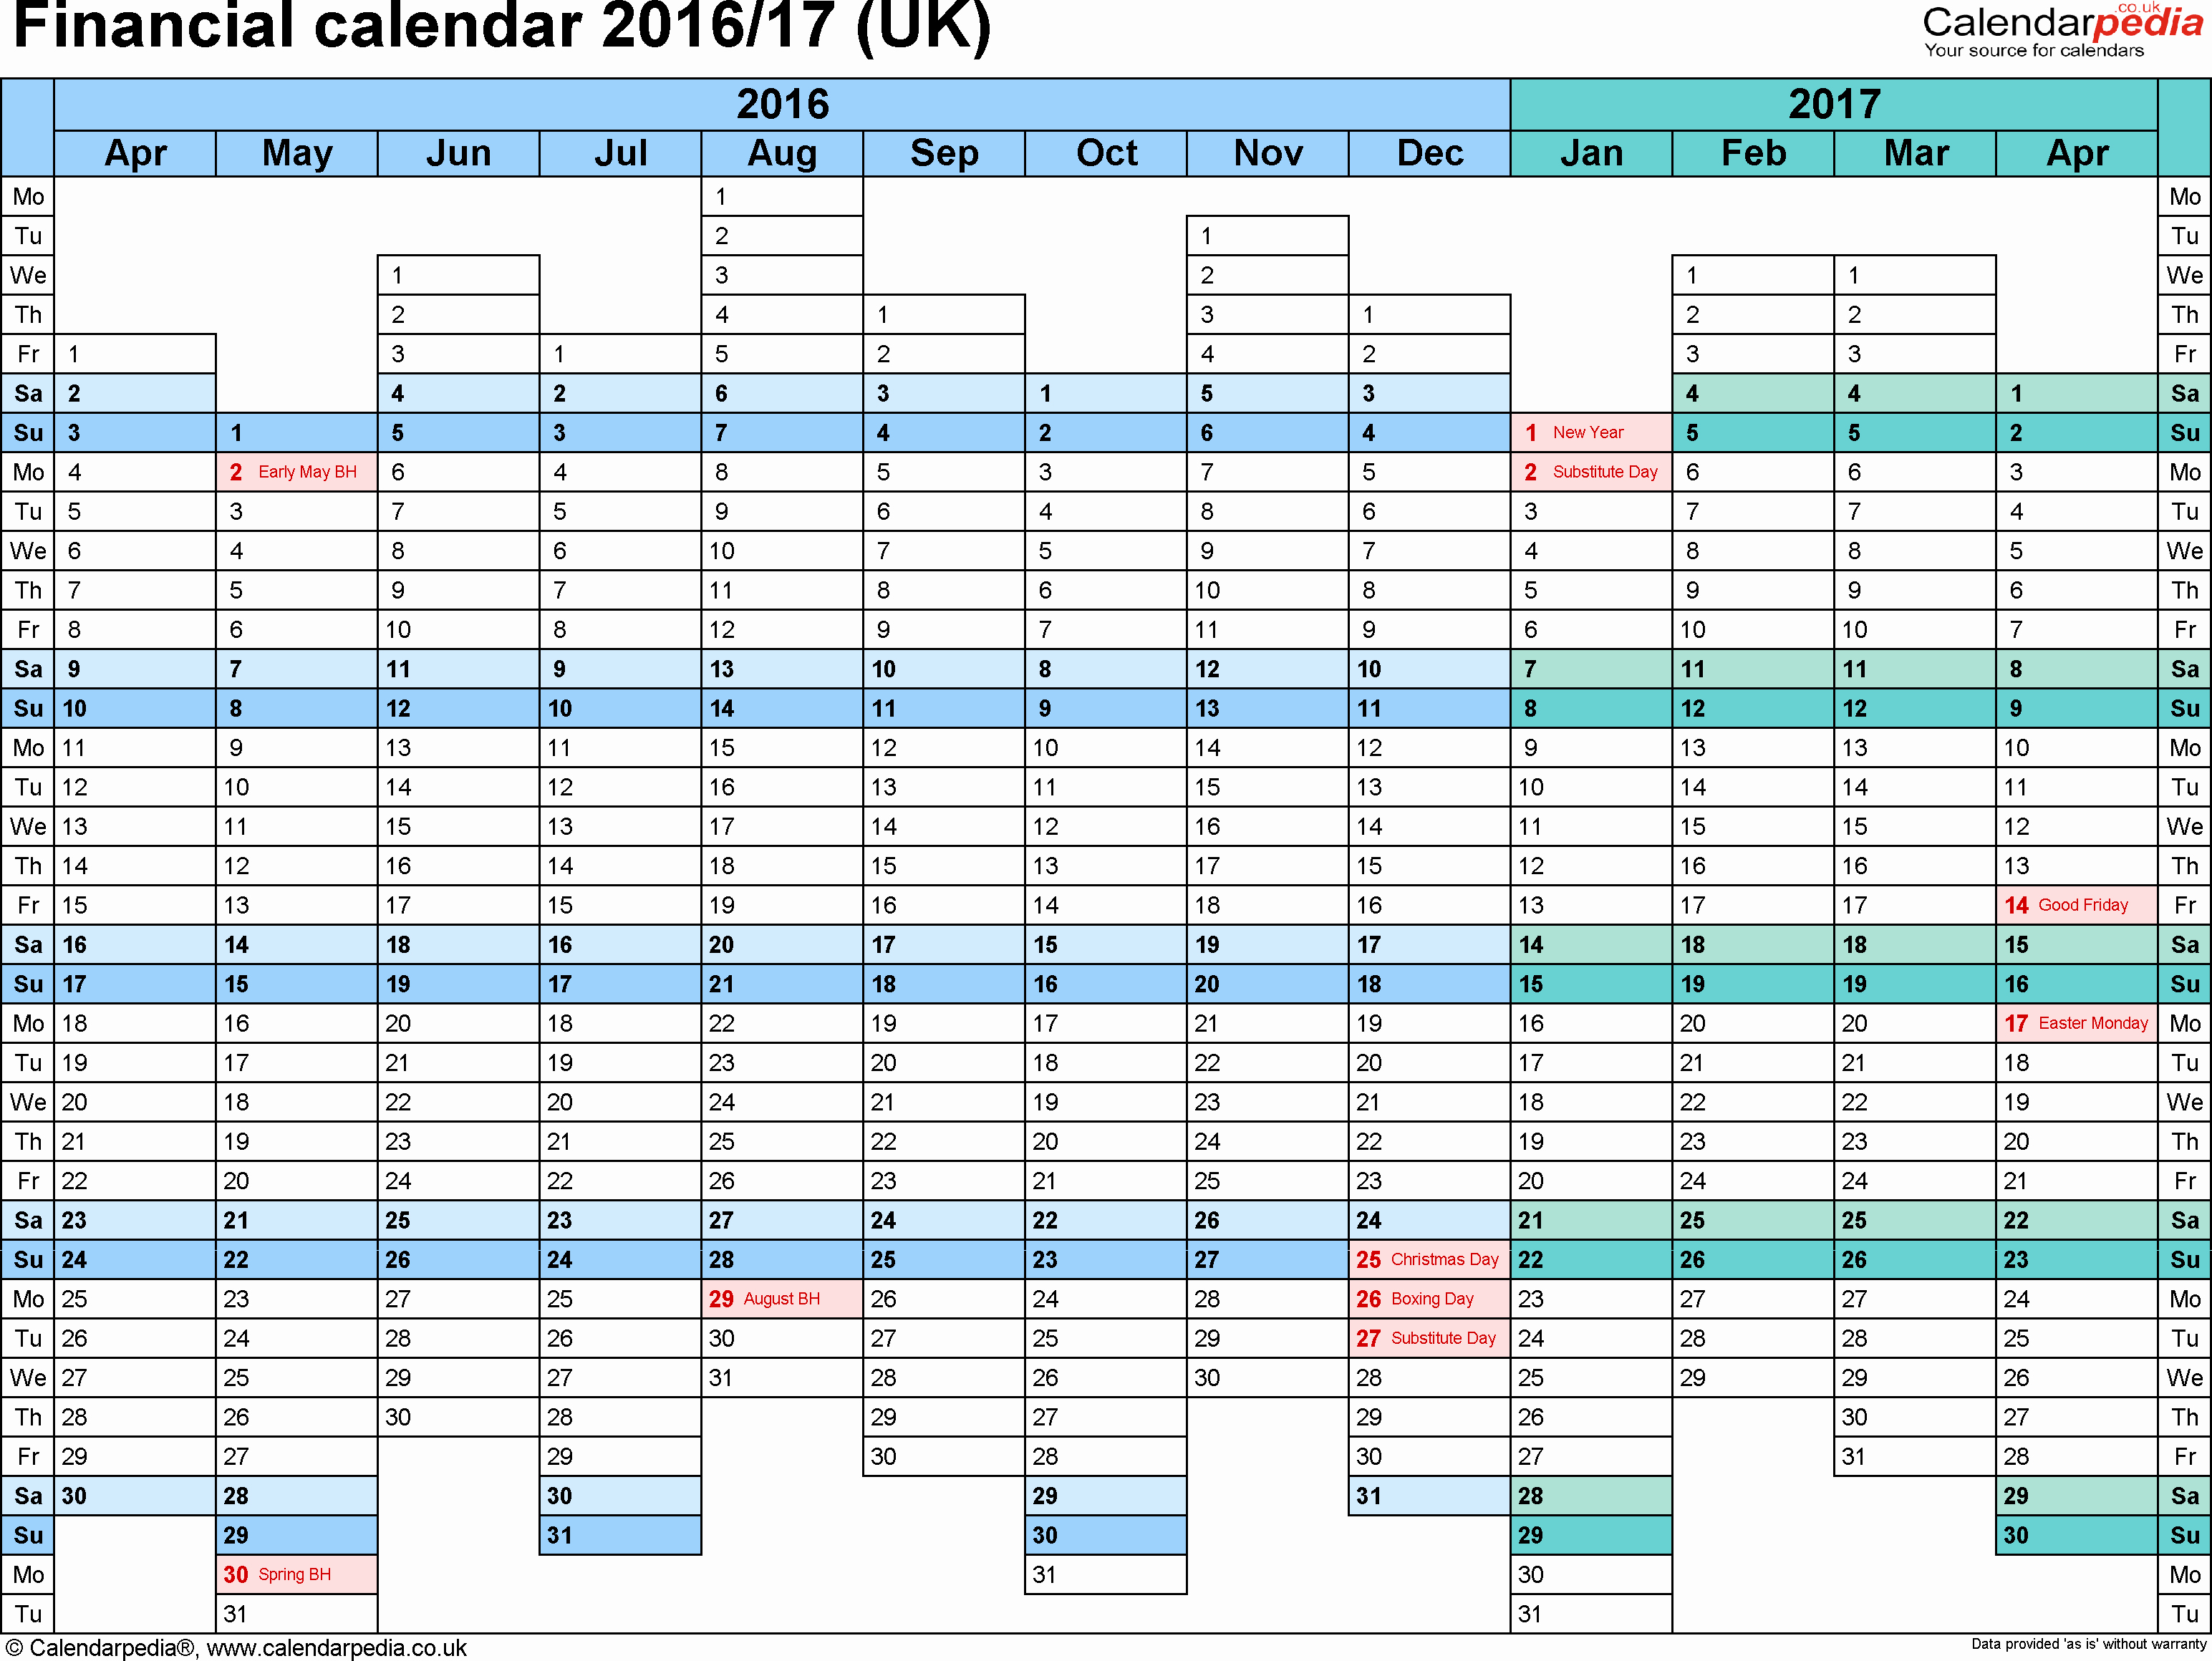 Calendar 2016-17 Template Inspirational Financial Calendars 2016 17 Uk In Pdf format